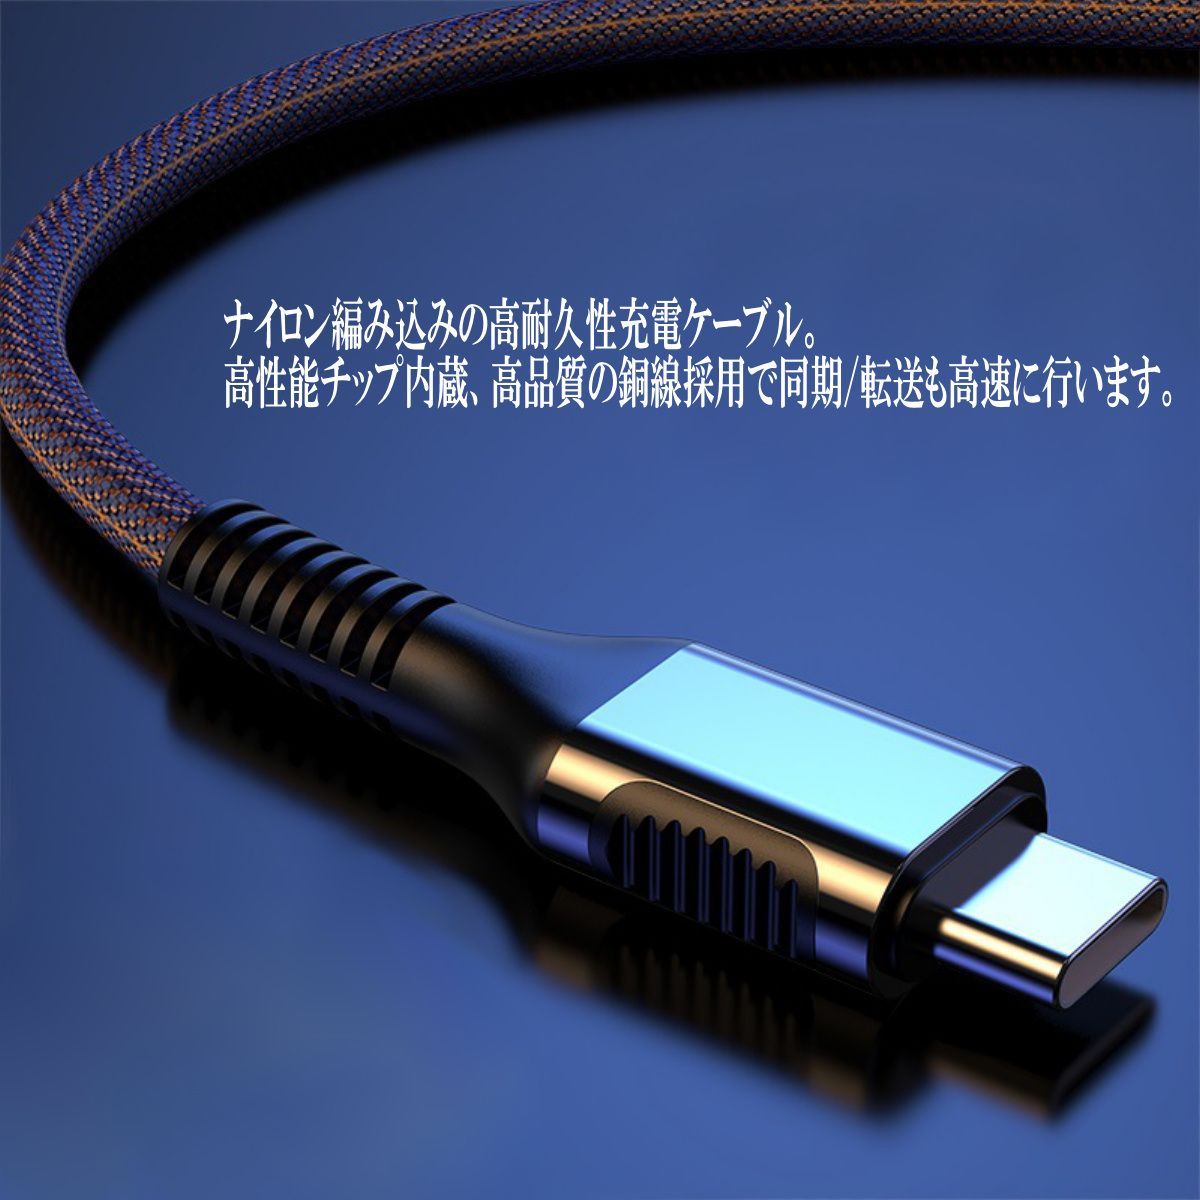 x-2 Type-C タイプC USB-C 急速充電 2本セット 充電ケーブル - 9